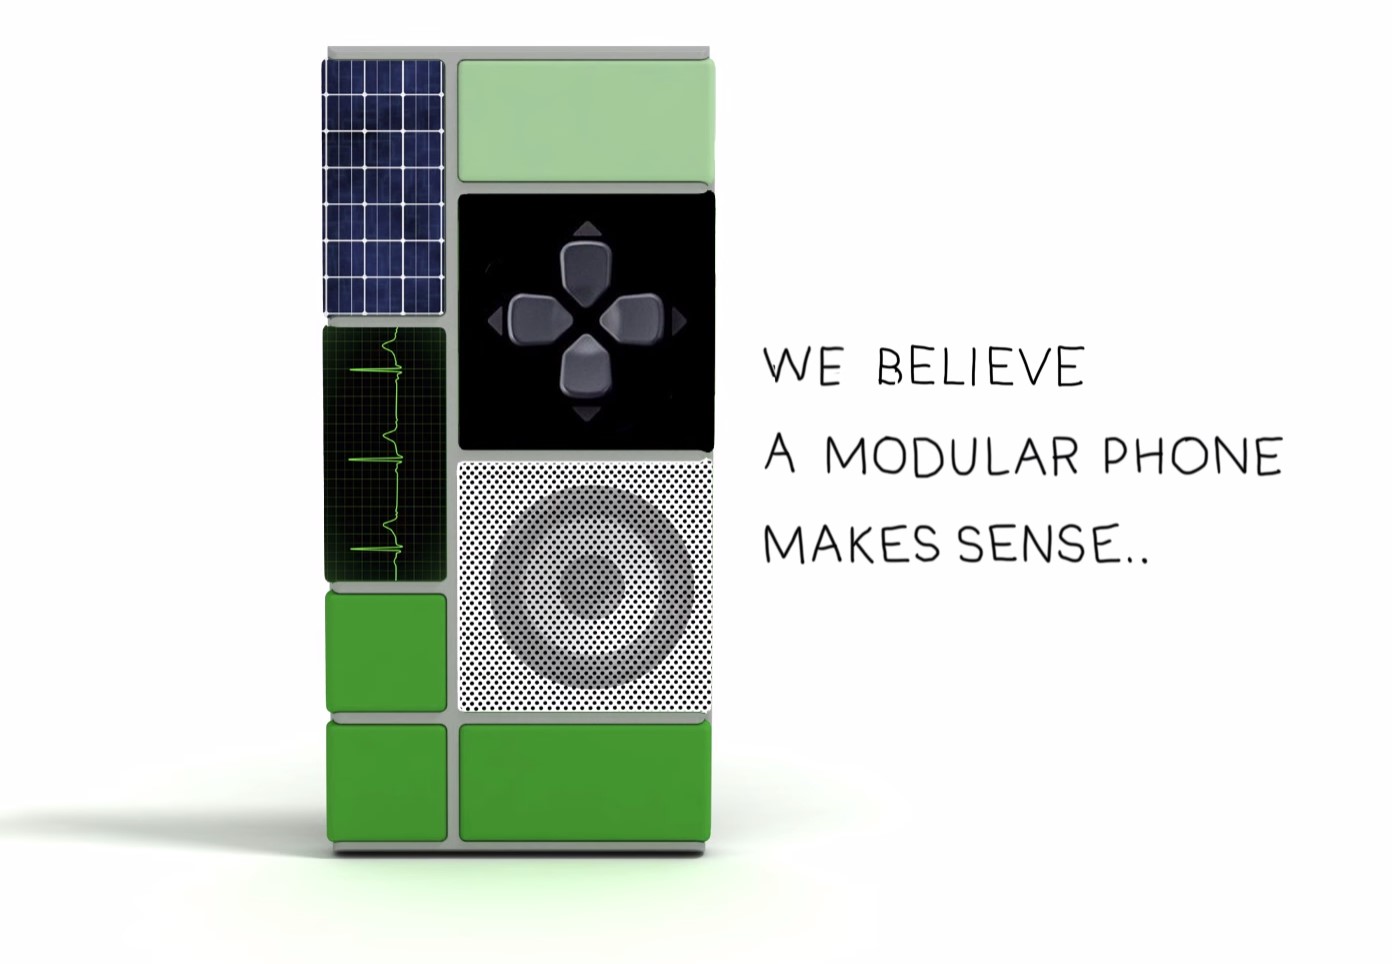 modular phones - phonebloks - what is a modular phone - Modular Cell Phones - Google Modular Phones